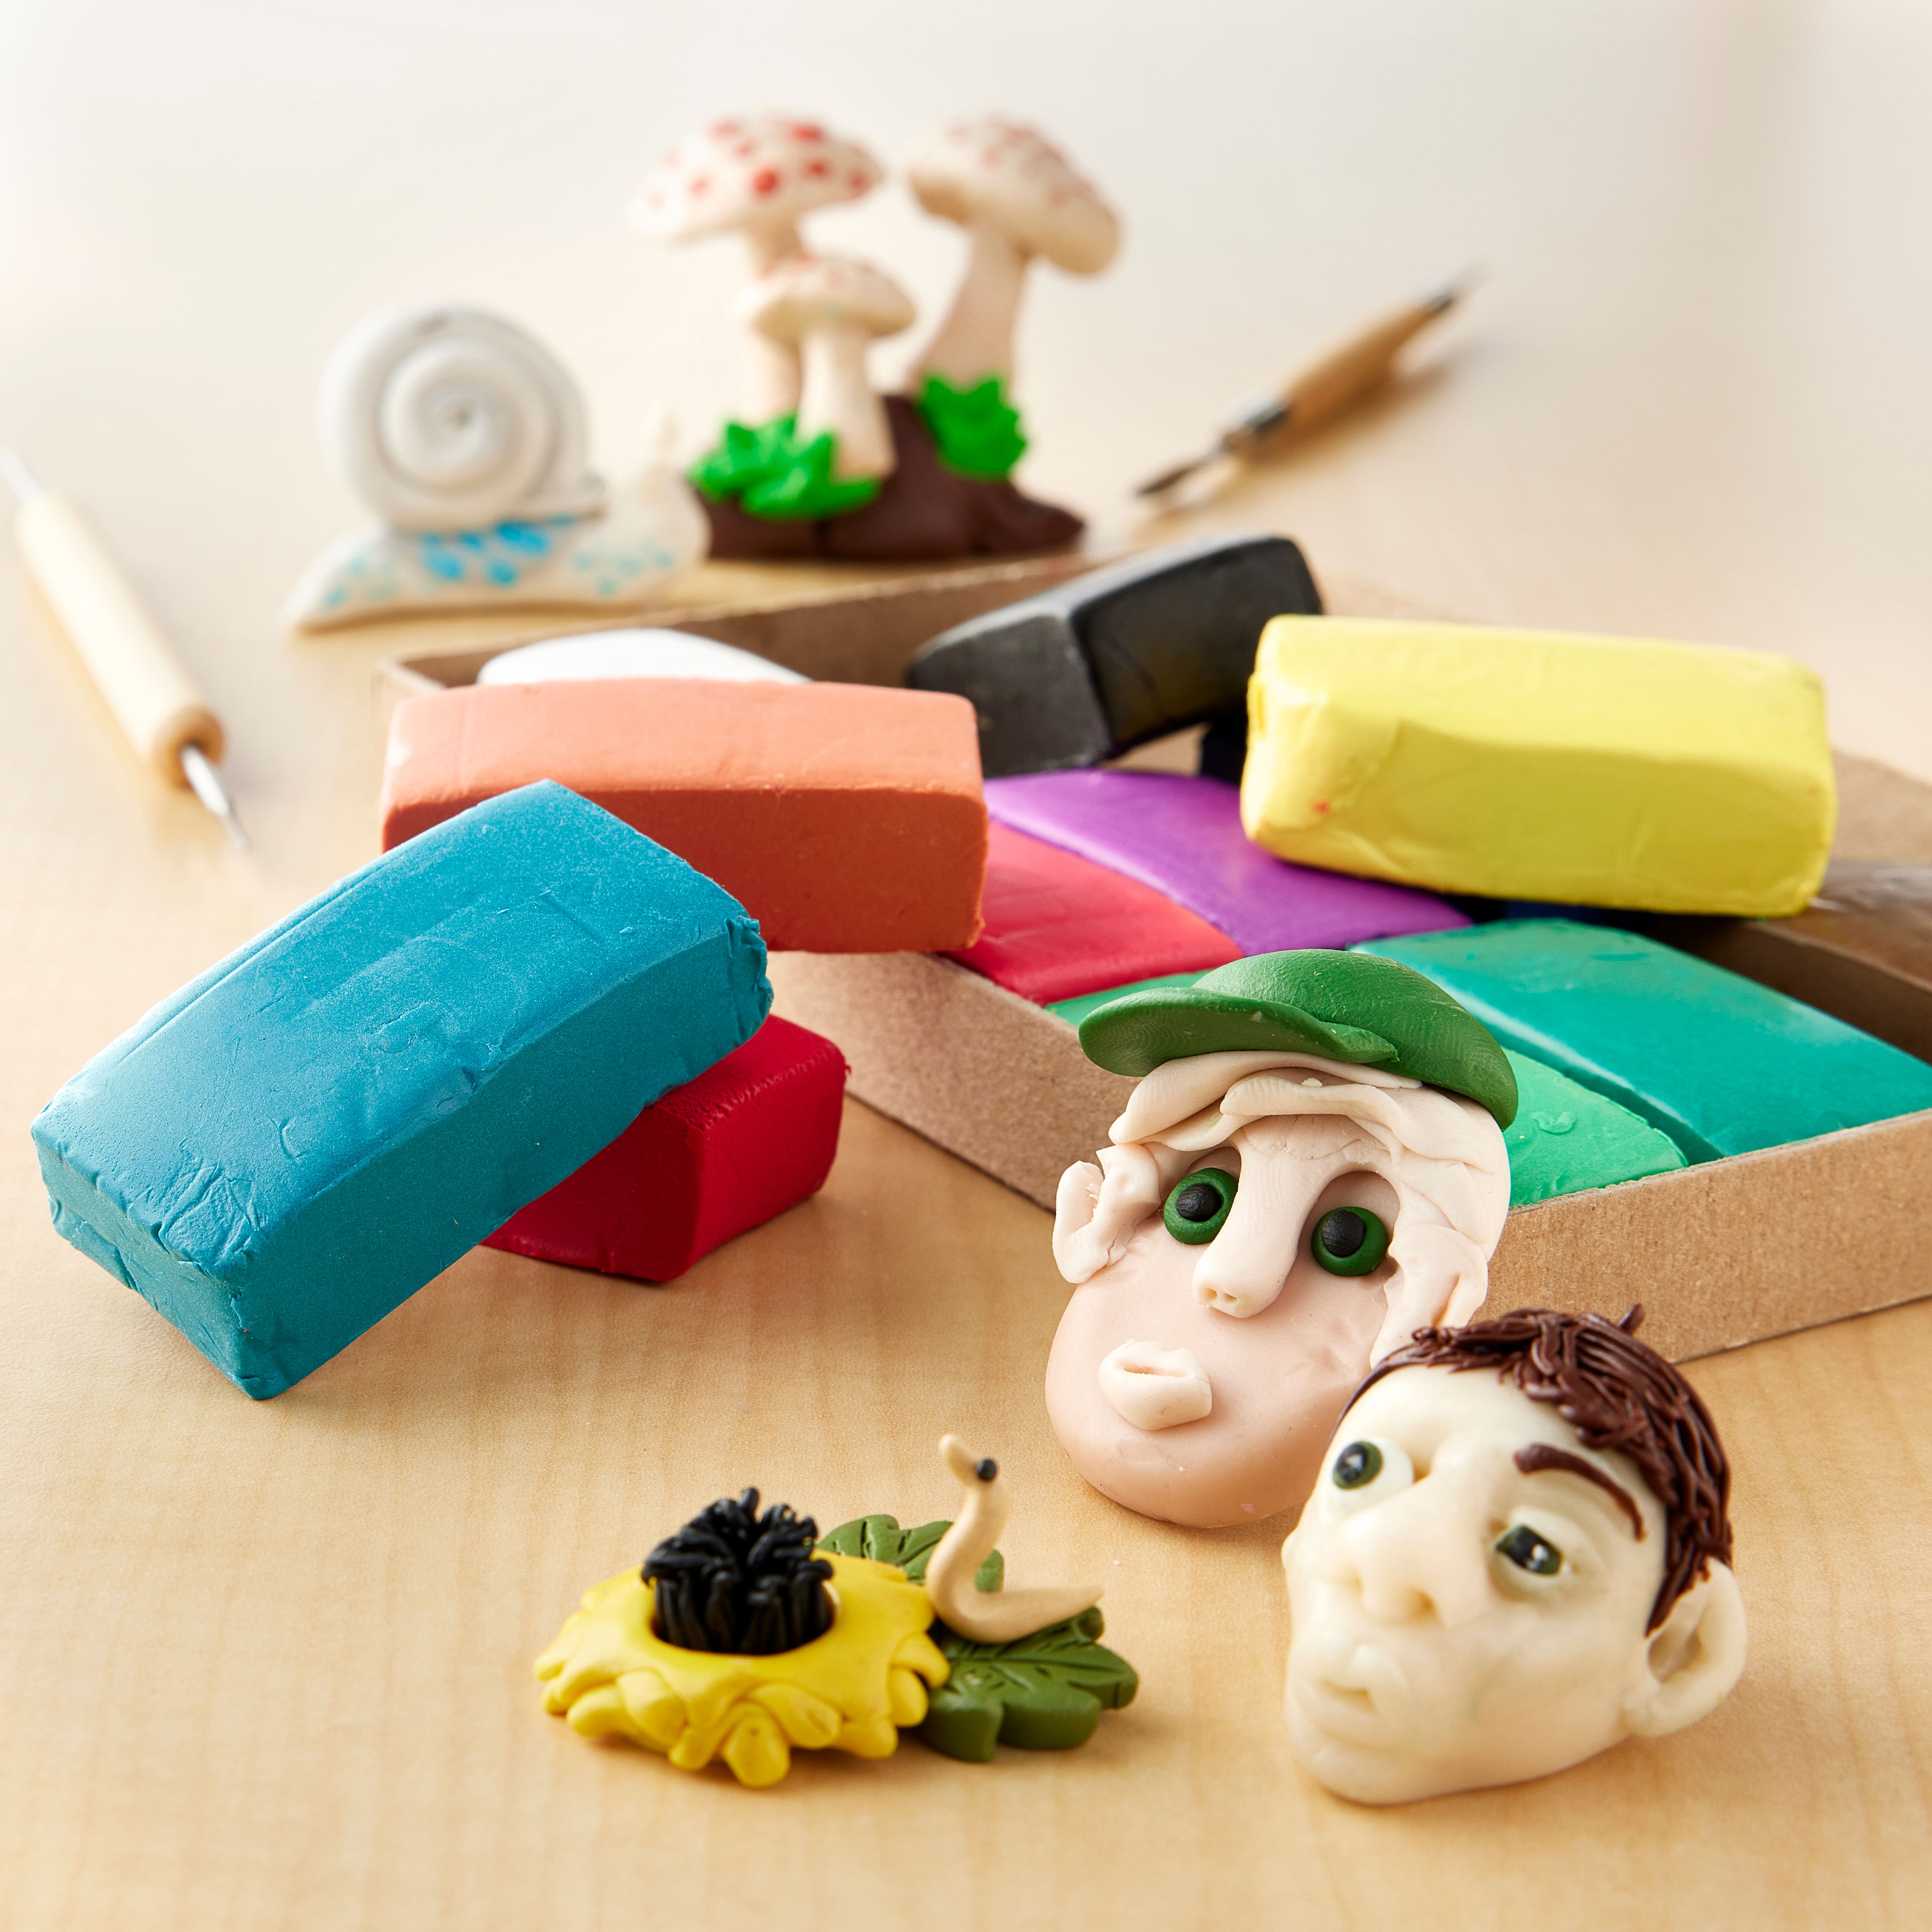 Sculpey Premo + Souffle Clay Multipack 1oz 24/Pkg-, 1 - Kroger